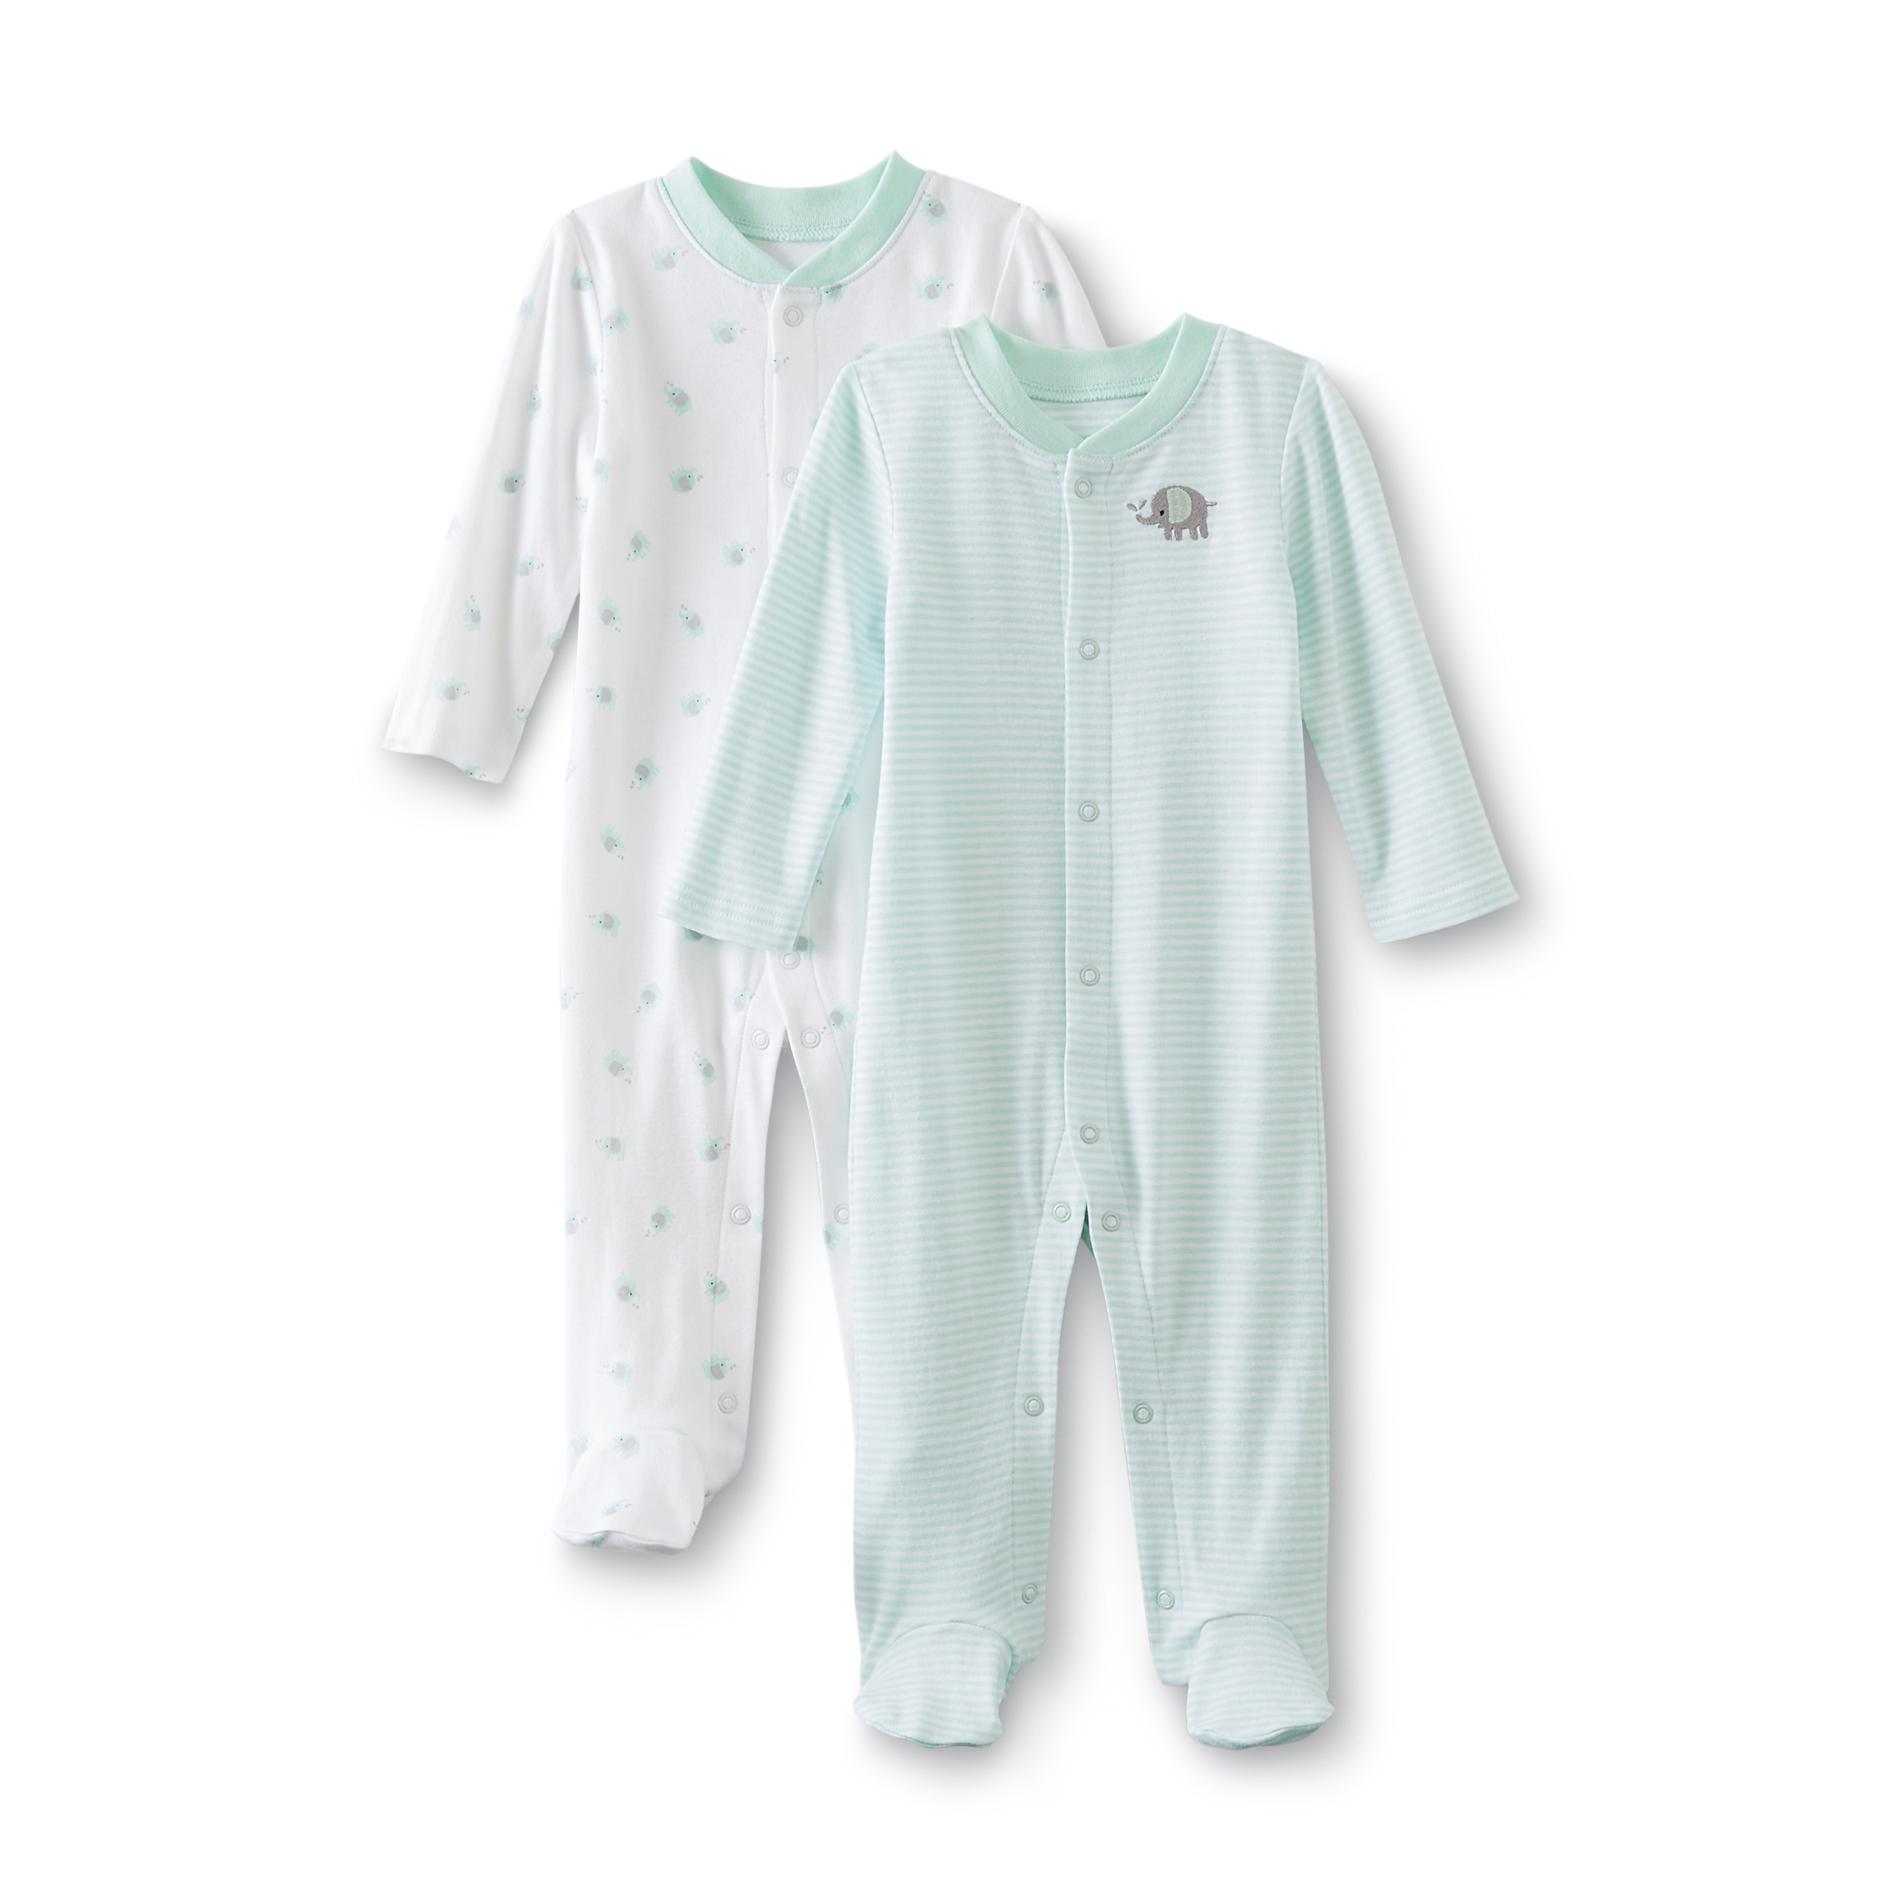 Small Wonders Newborn's 2-Pack Footed Sleeper Pajamas - Elephant